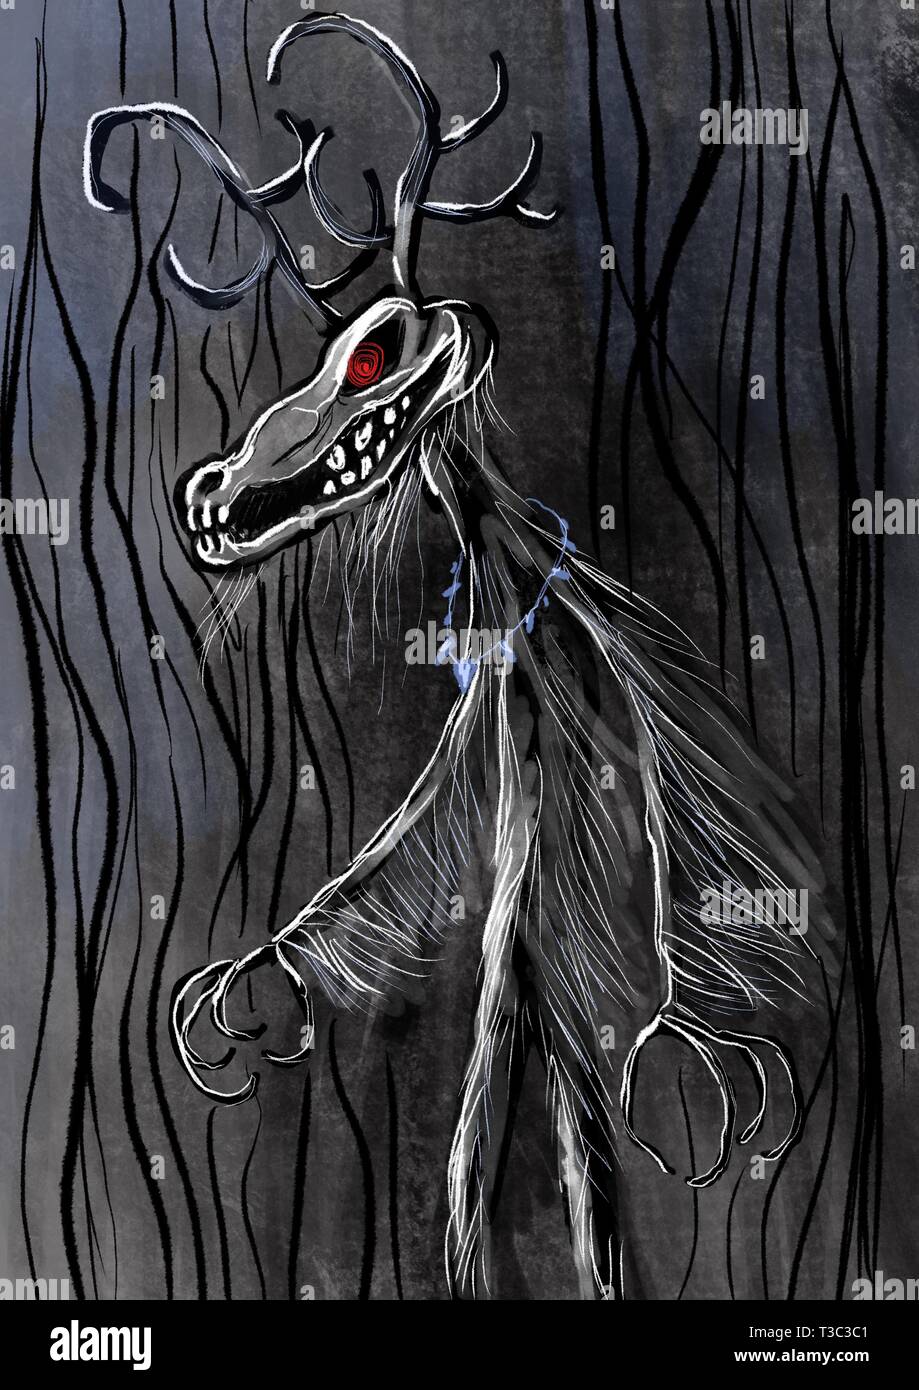 Wendigo cryptid fantasy monster  illustration Stock Photo